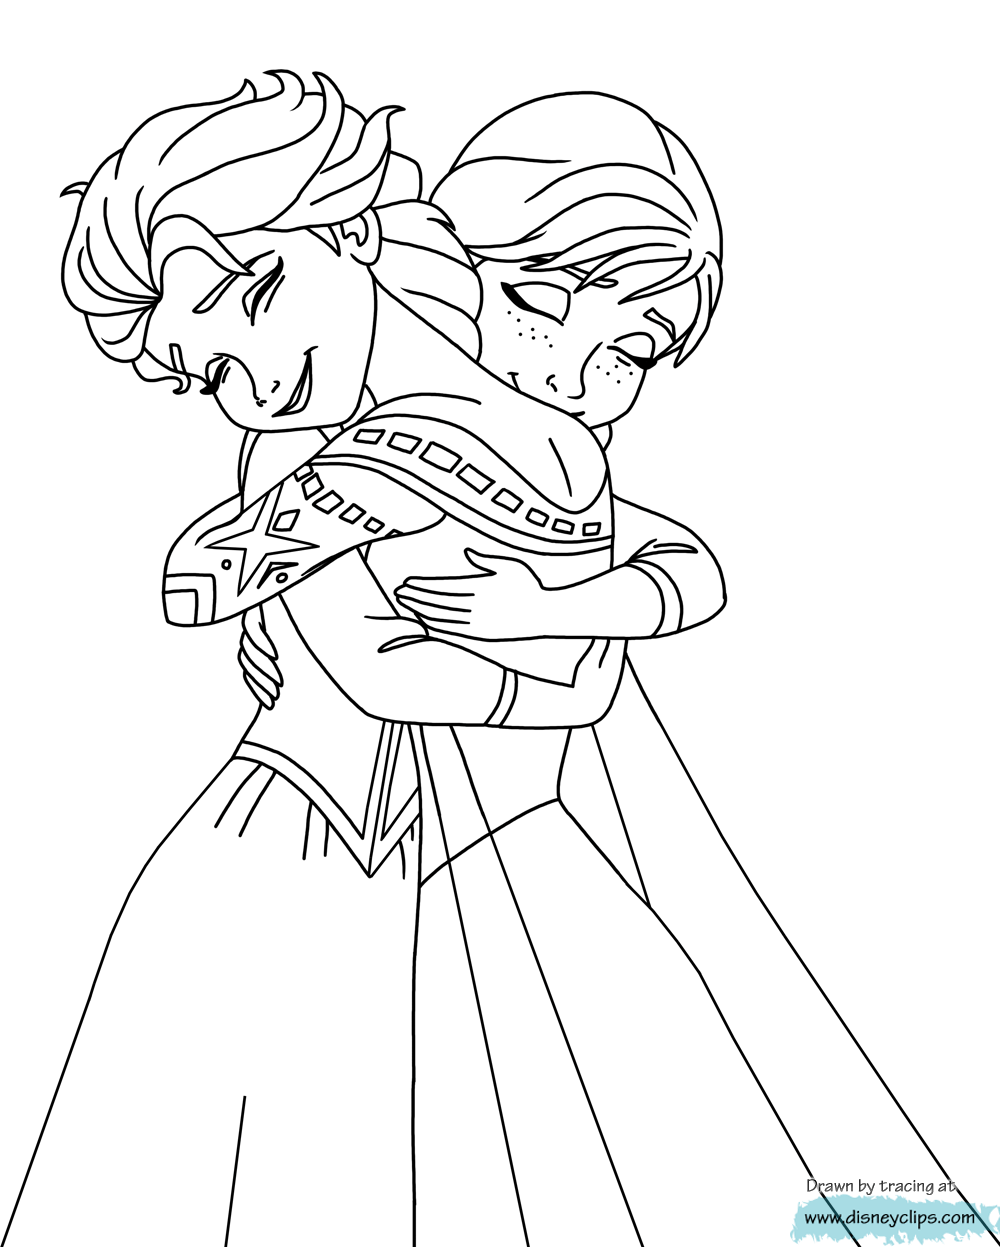 Anna et Elsa, les célèbres princesses Disney, s'enlacent